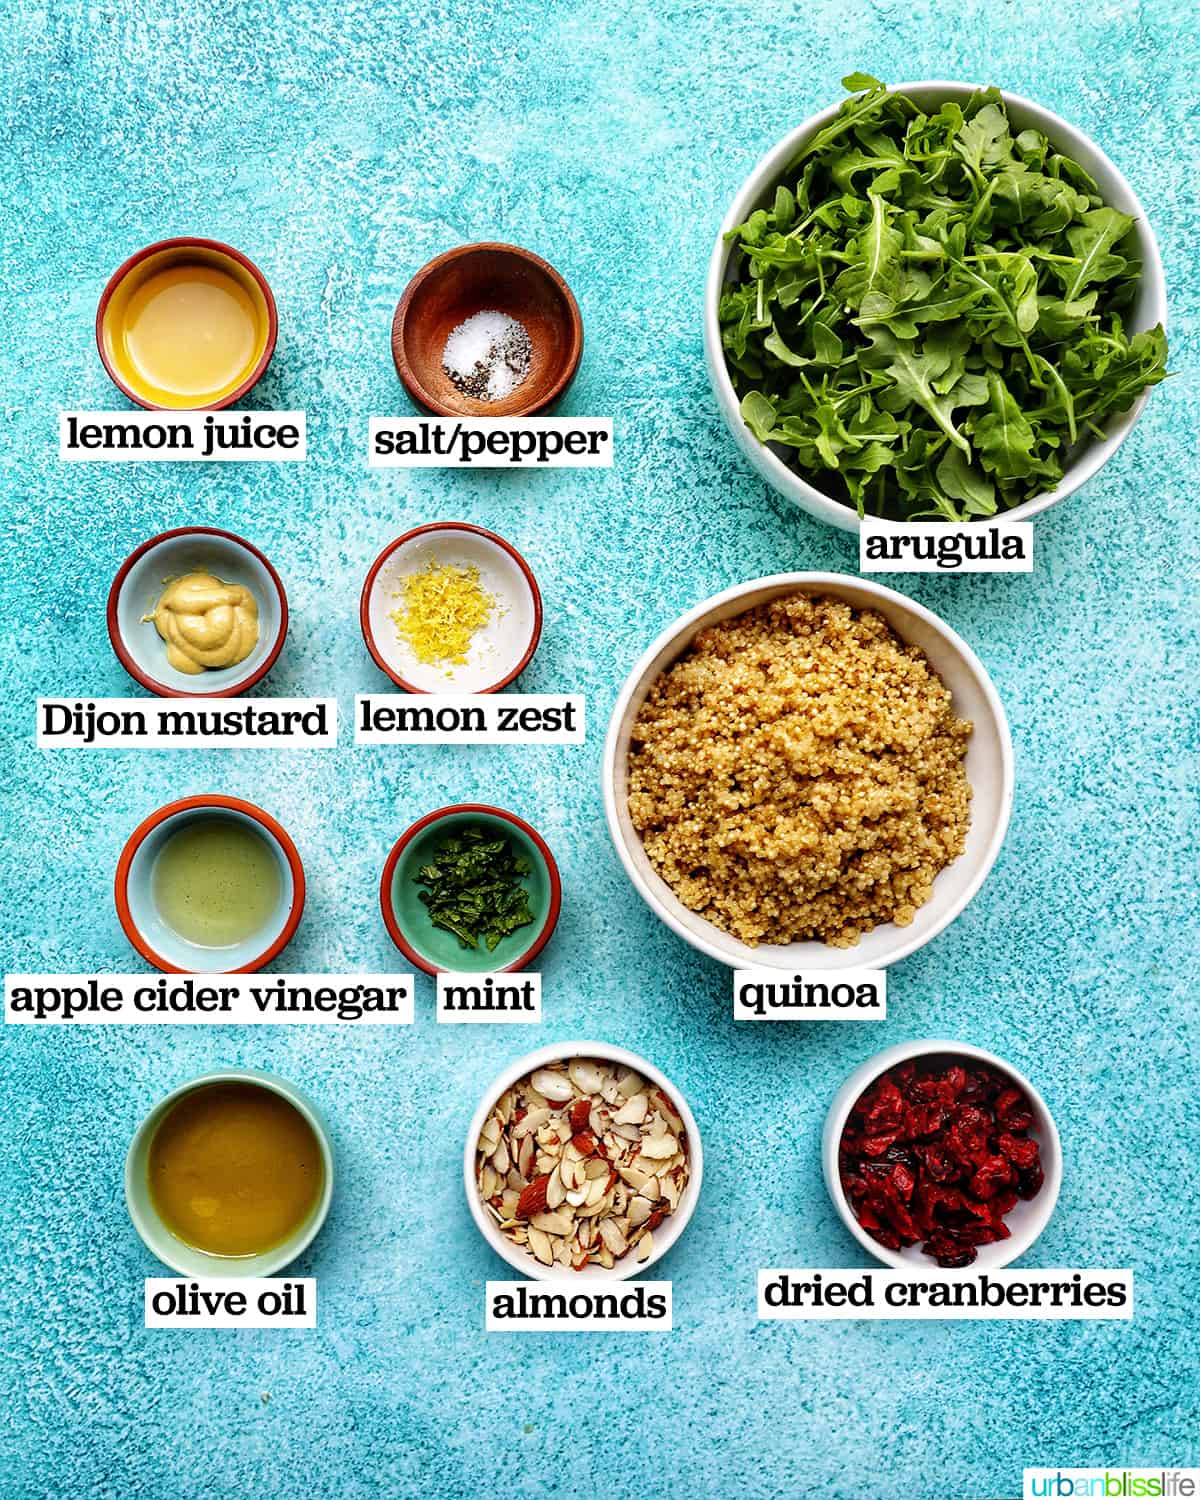 bowls of ingredients to make arugula and quinoa salad.